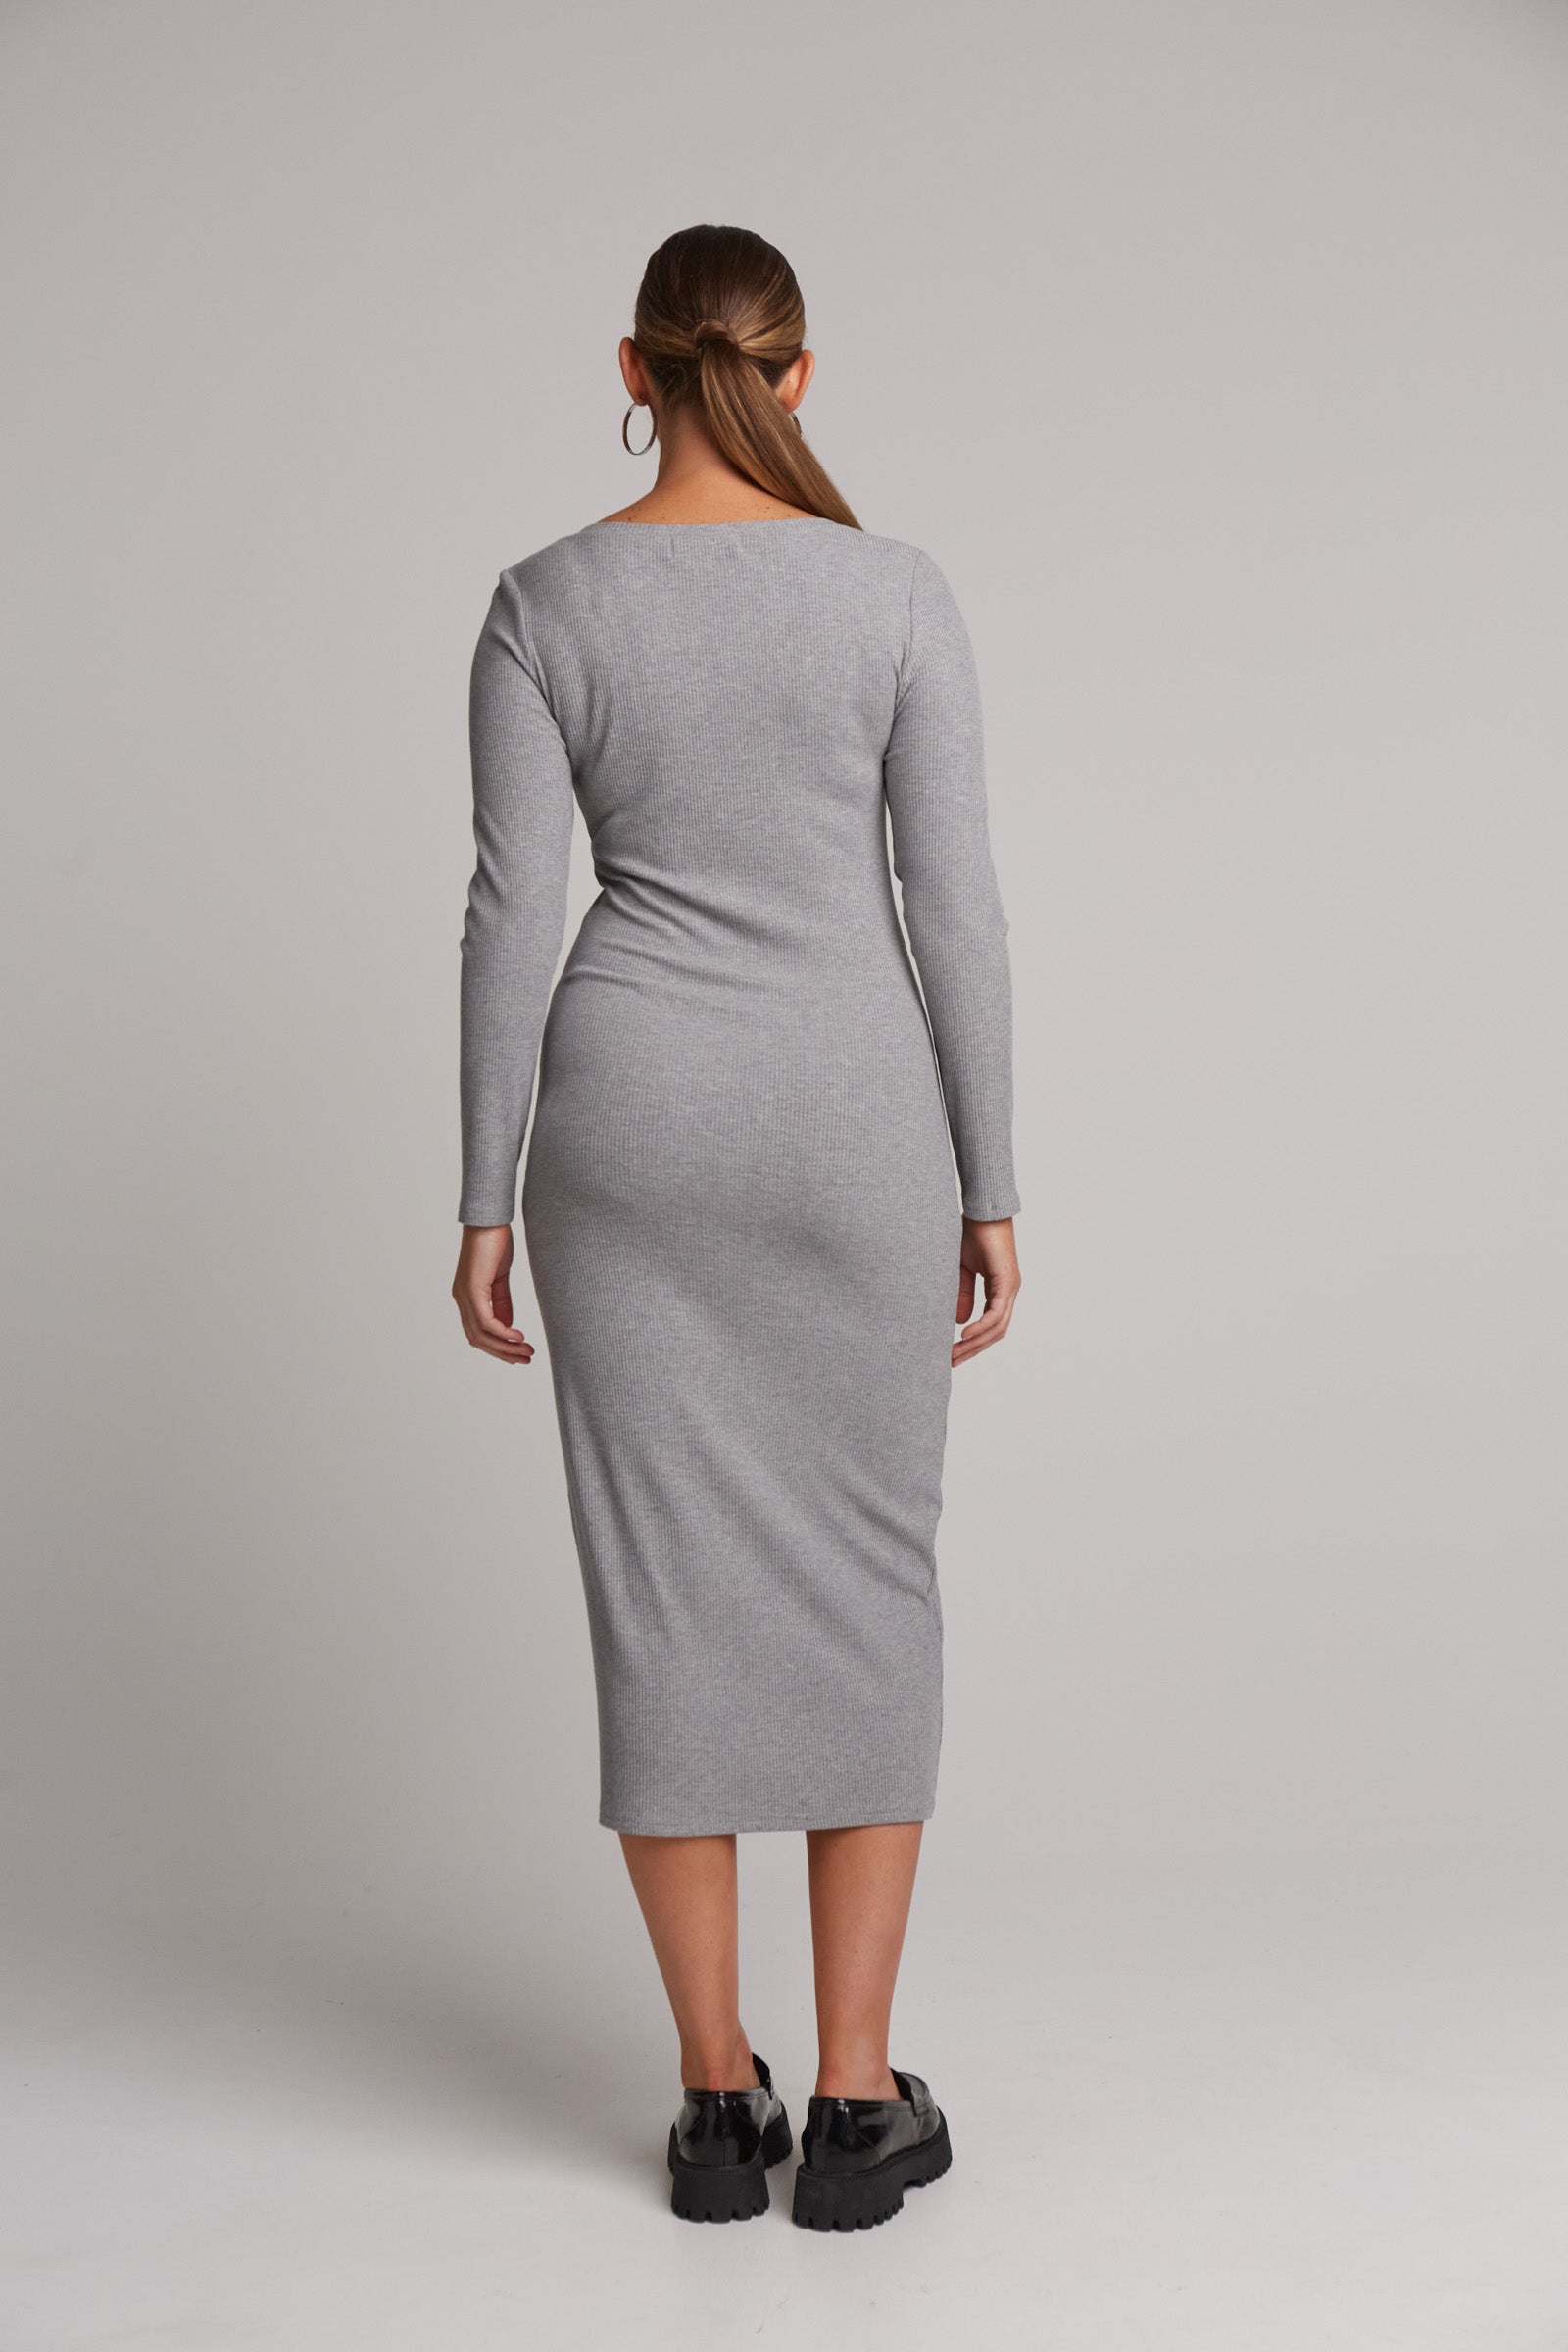 Studio Jersey Maxi - Gray - eb&ive Clothing - Dress Maxi